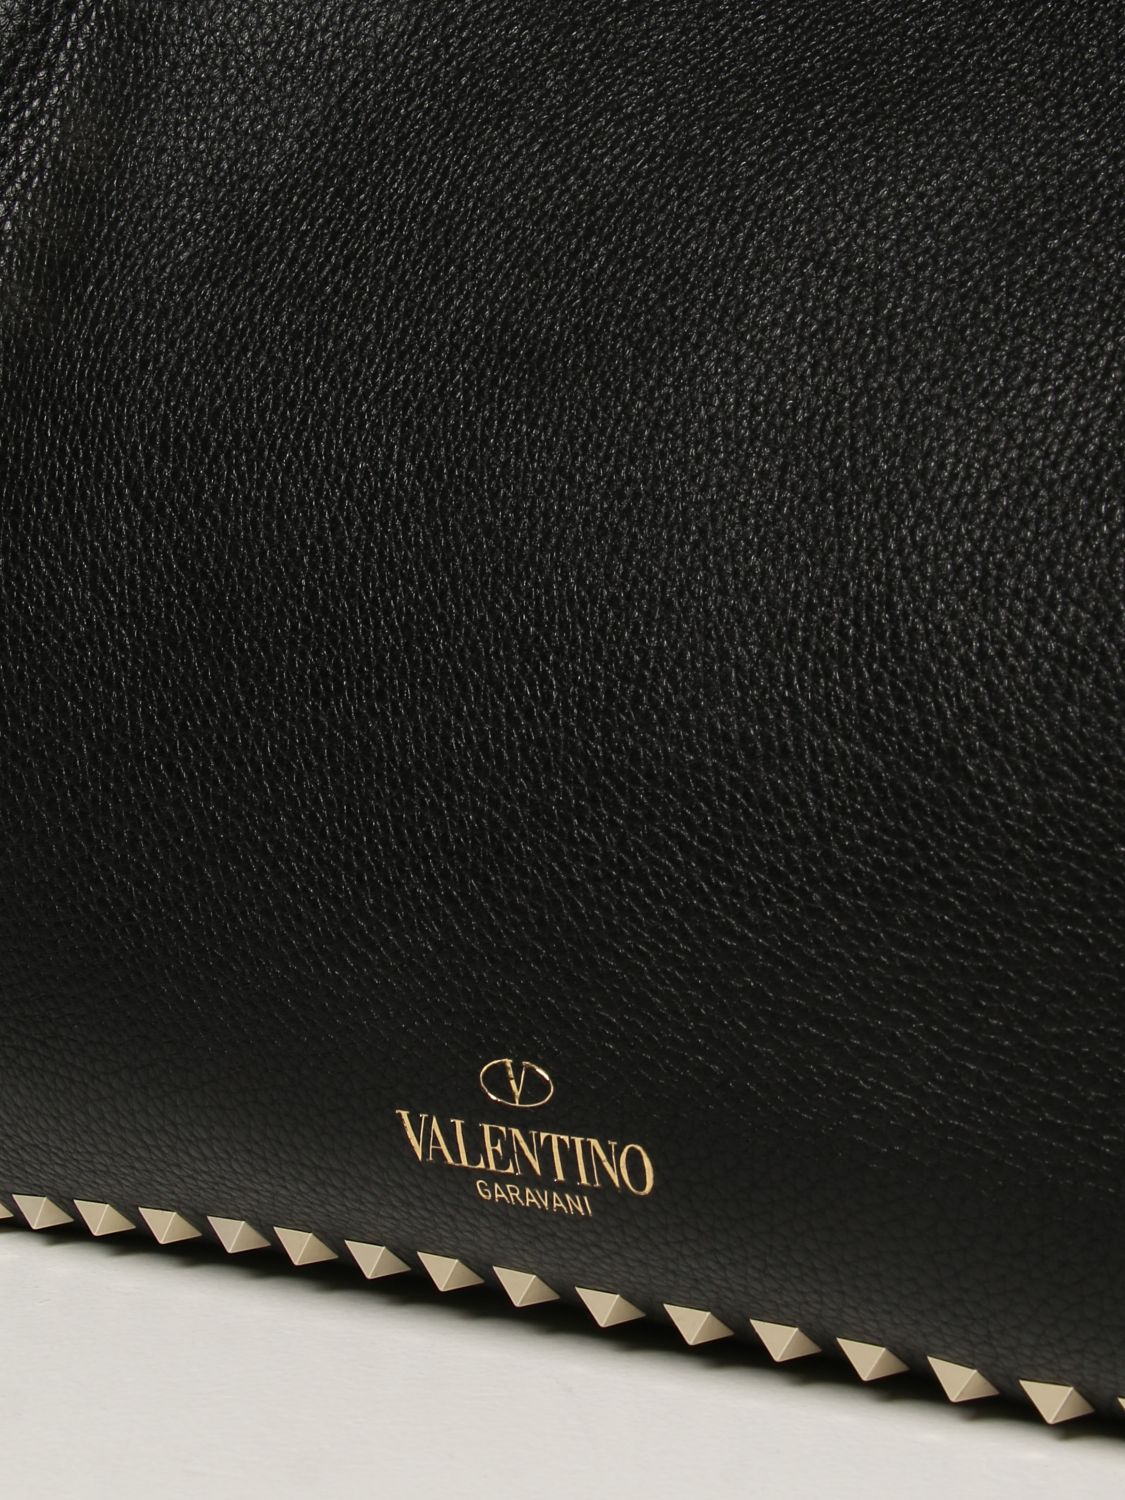 Valentino Garavani Rockstud bag in hammered leather with studs